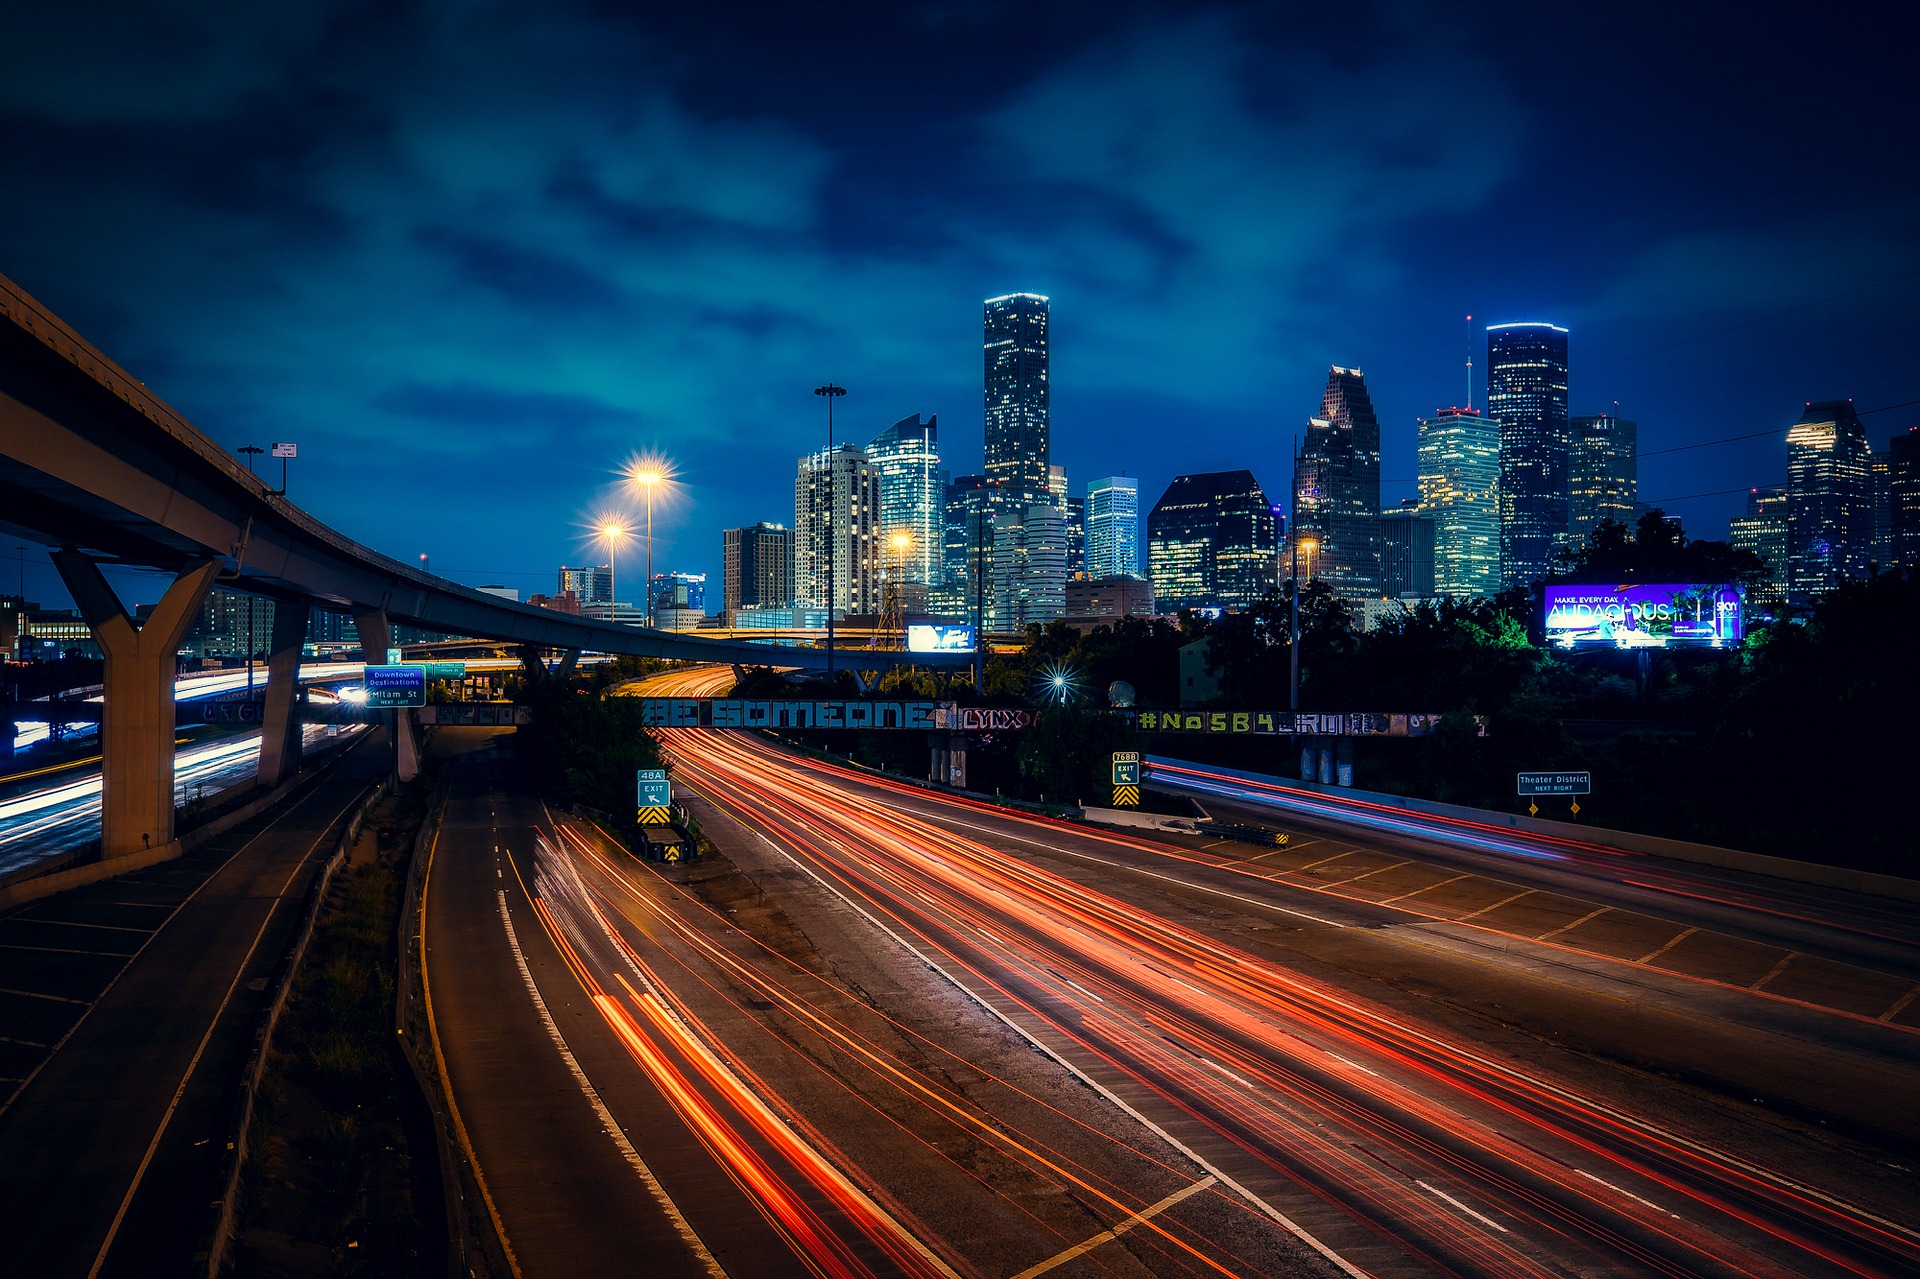 Houston skyline at night, image via Pixabay